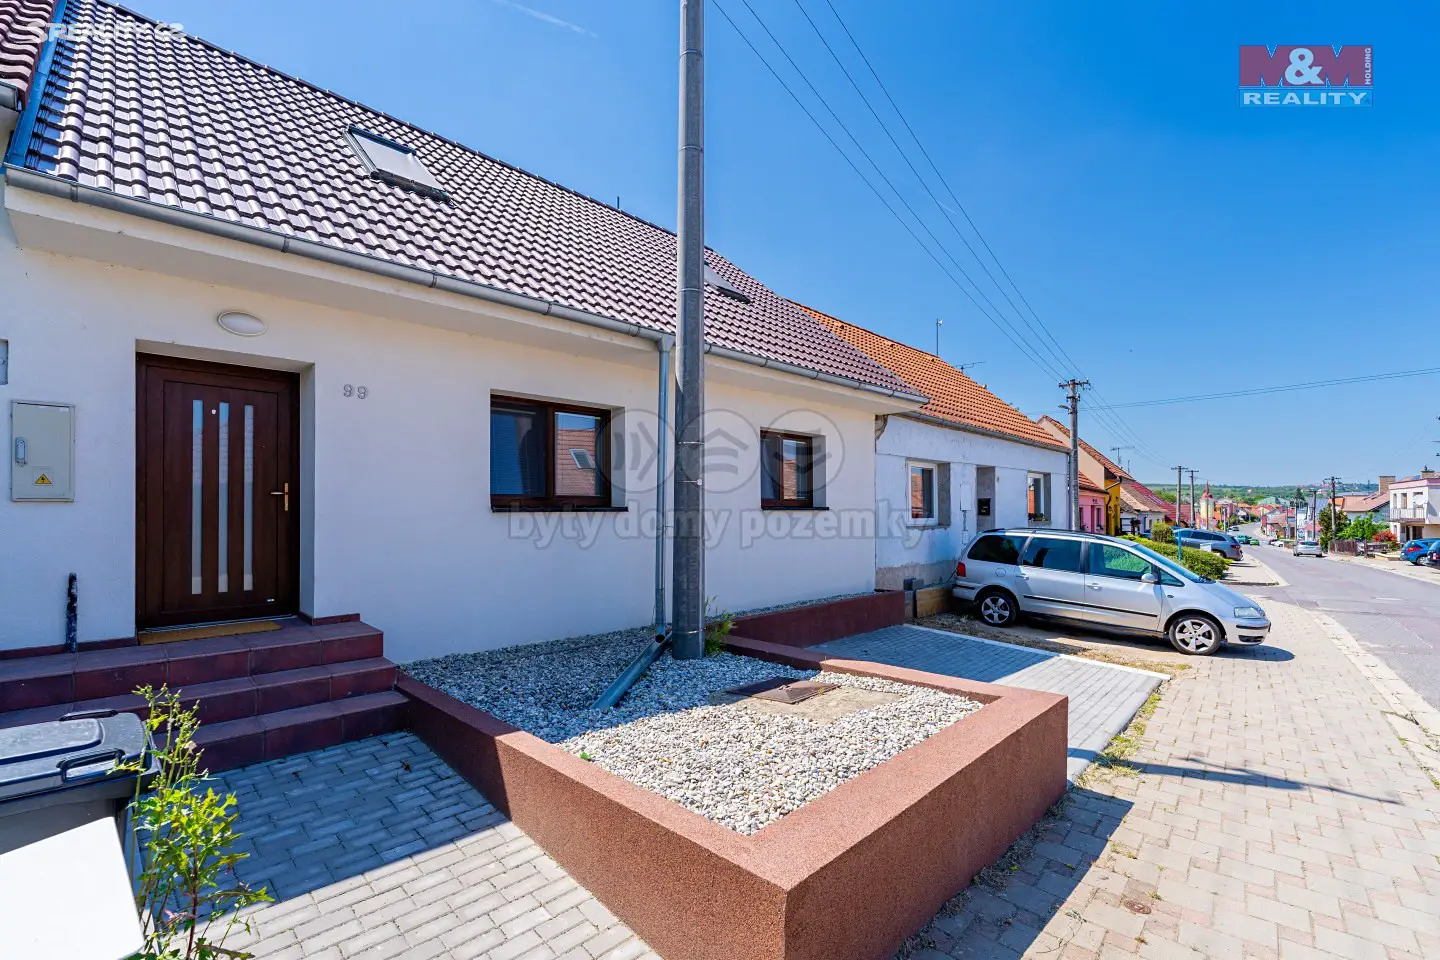 Prodej  rodinného domu 100 m², pozemek 241 m², Blatná, Nový Šaldorf-Sedlešovice - Nový Šaldorf